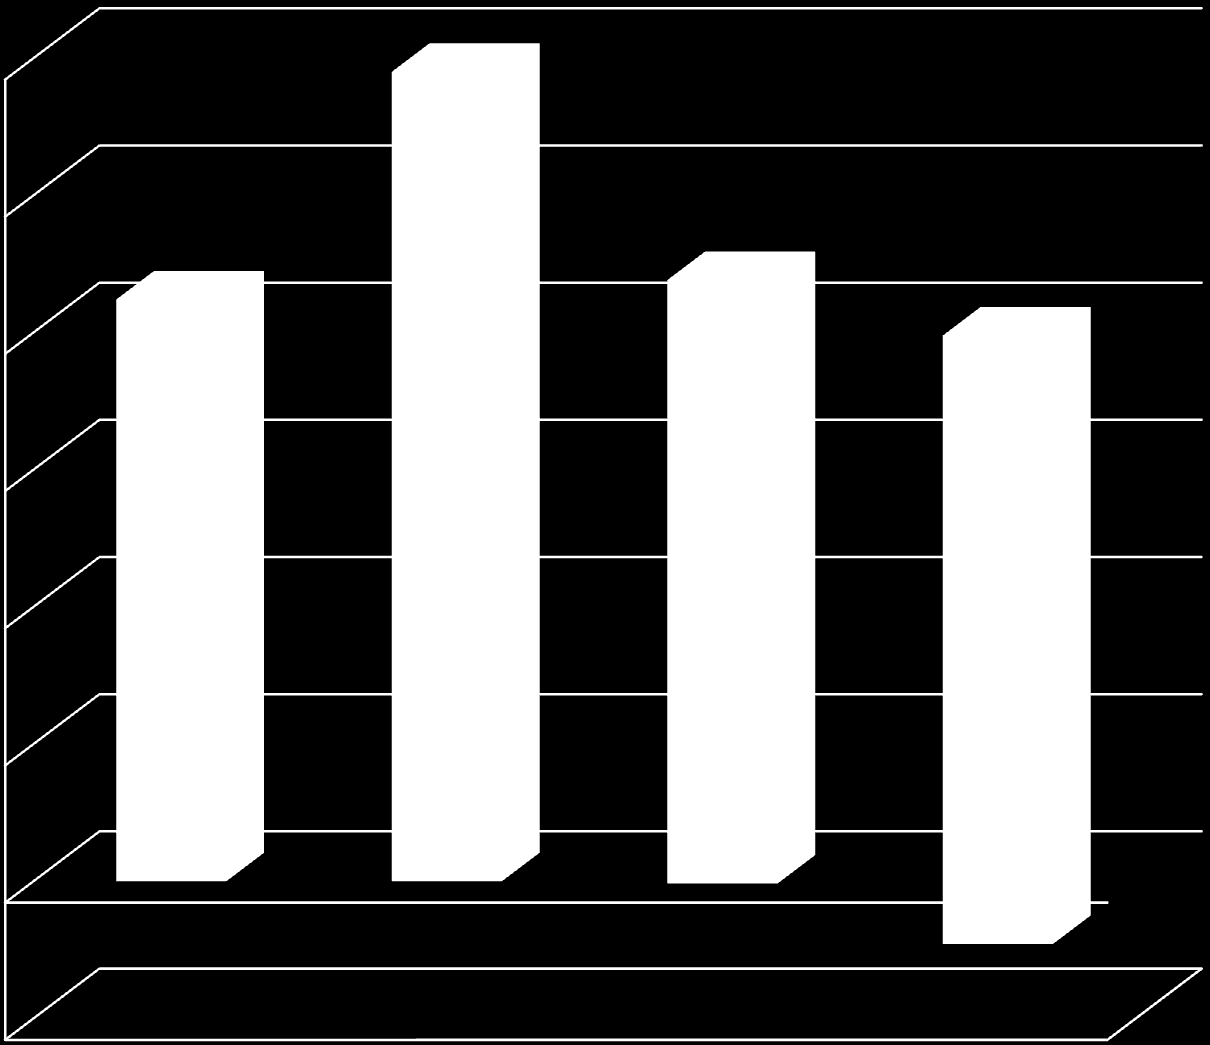 Profil emisi 2005 dan 2020 (giga ton) 3 2.5 2 1.